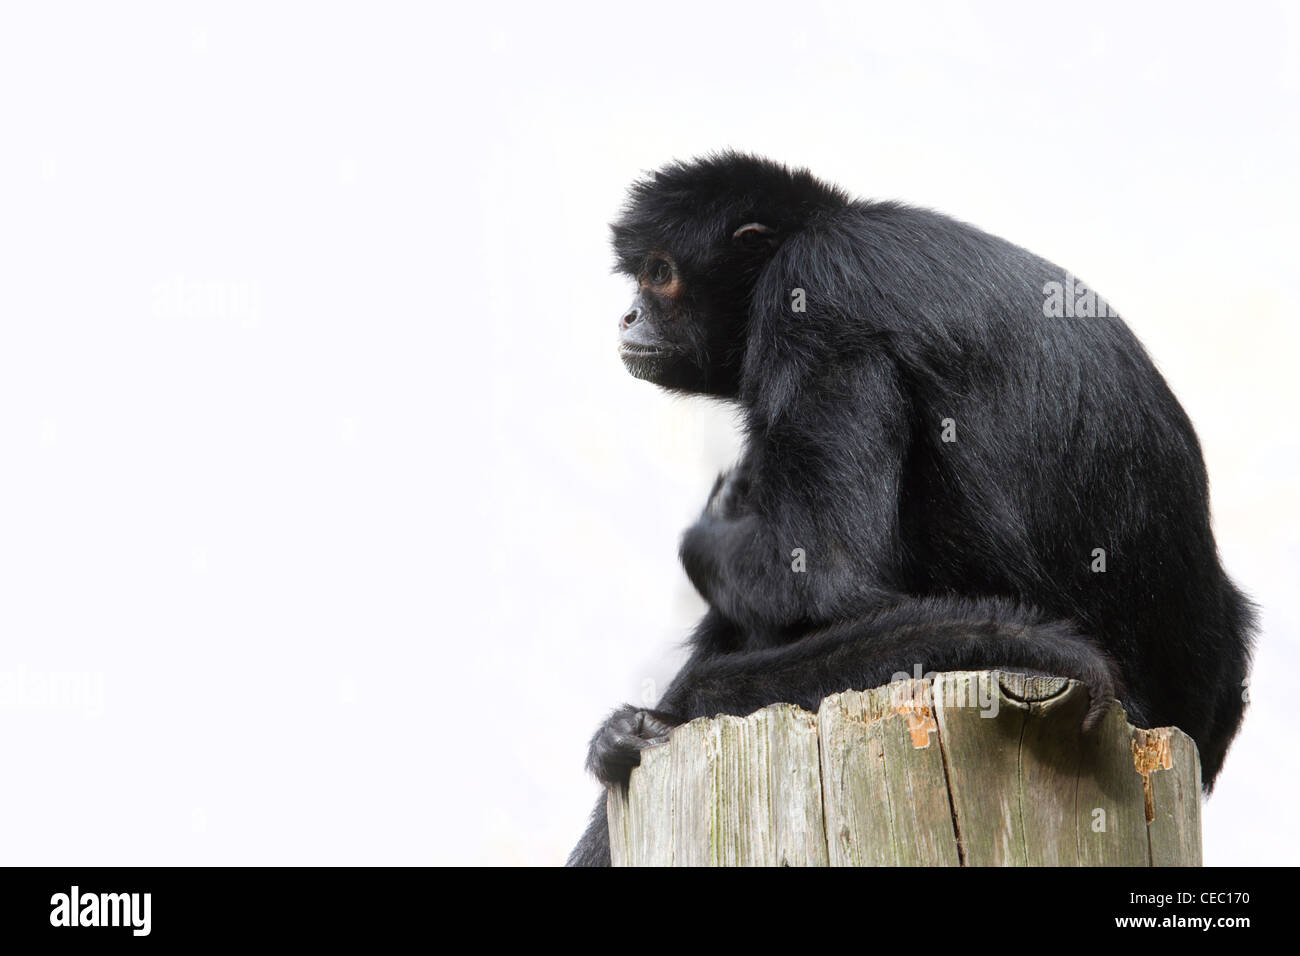 Black Spider Monkey ( Ateles paniscus) resting High up Stock Photo